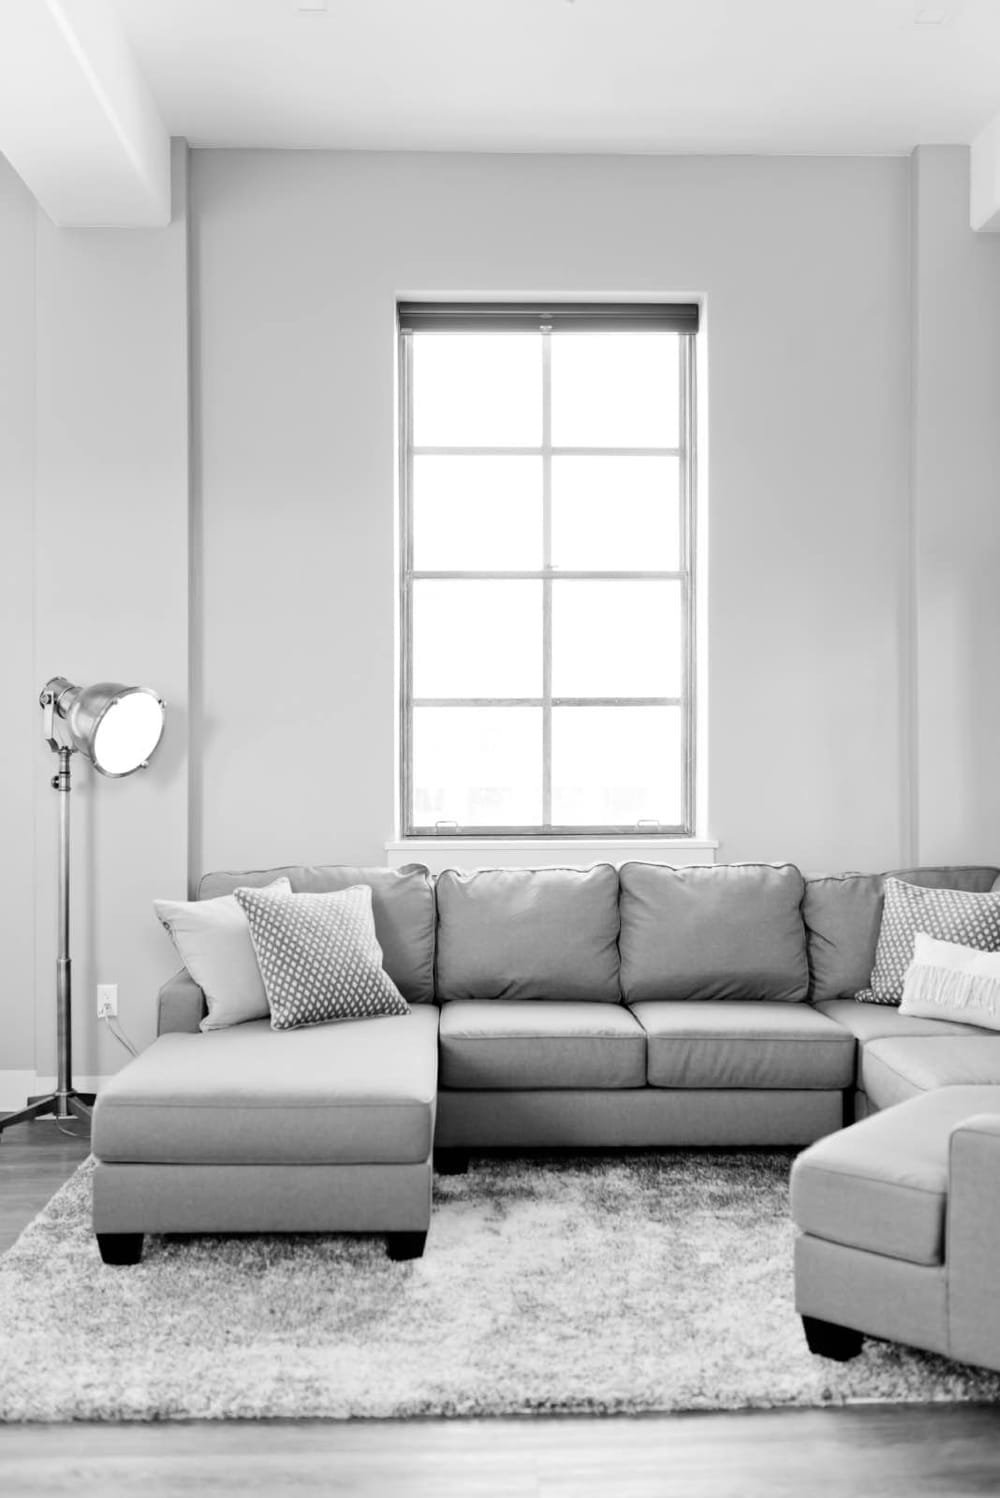 sala de estar com sofá, almofadas e tapete tons de cinza e branco